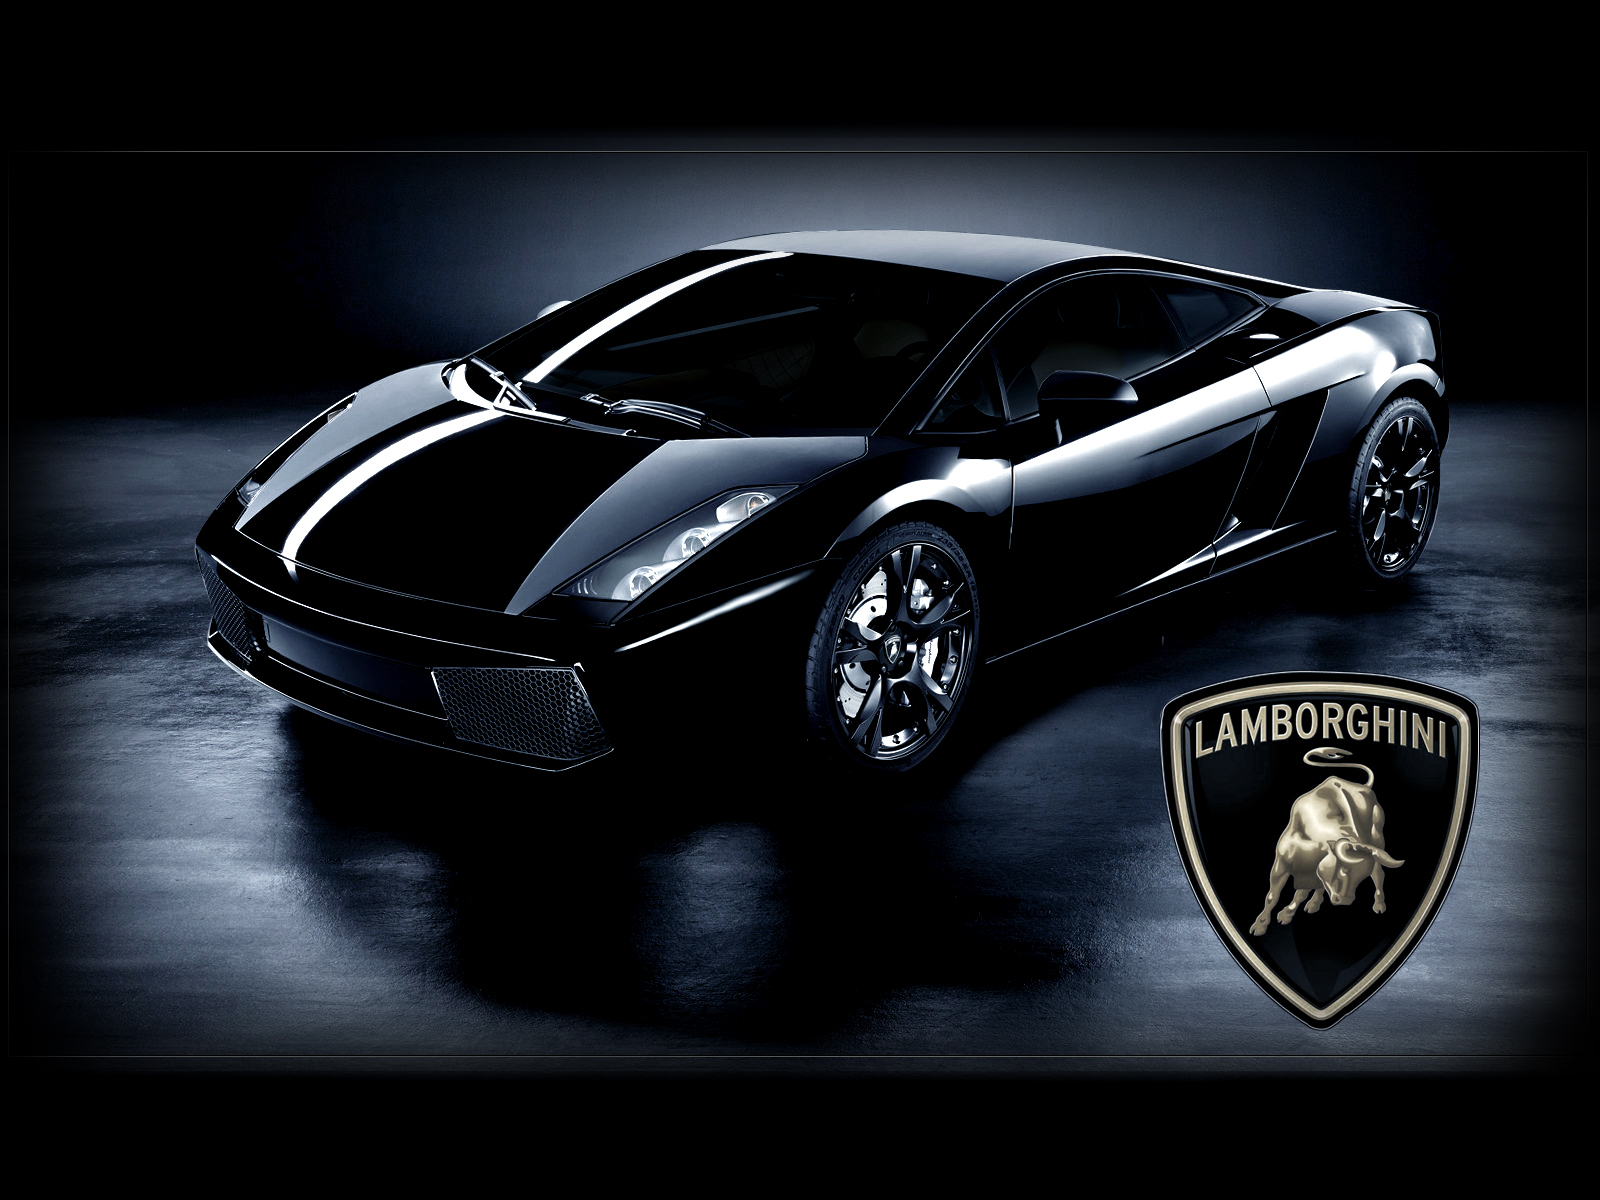  this out our new Lamborghini Gallardo wallpaper Gallardo wallpapers